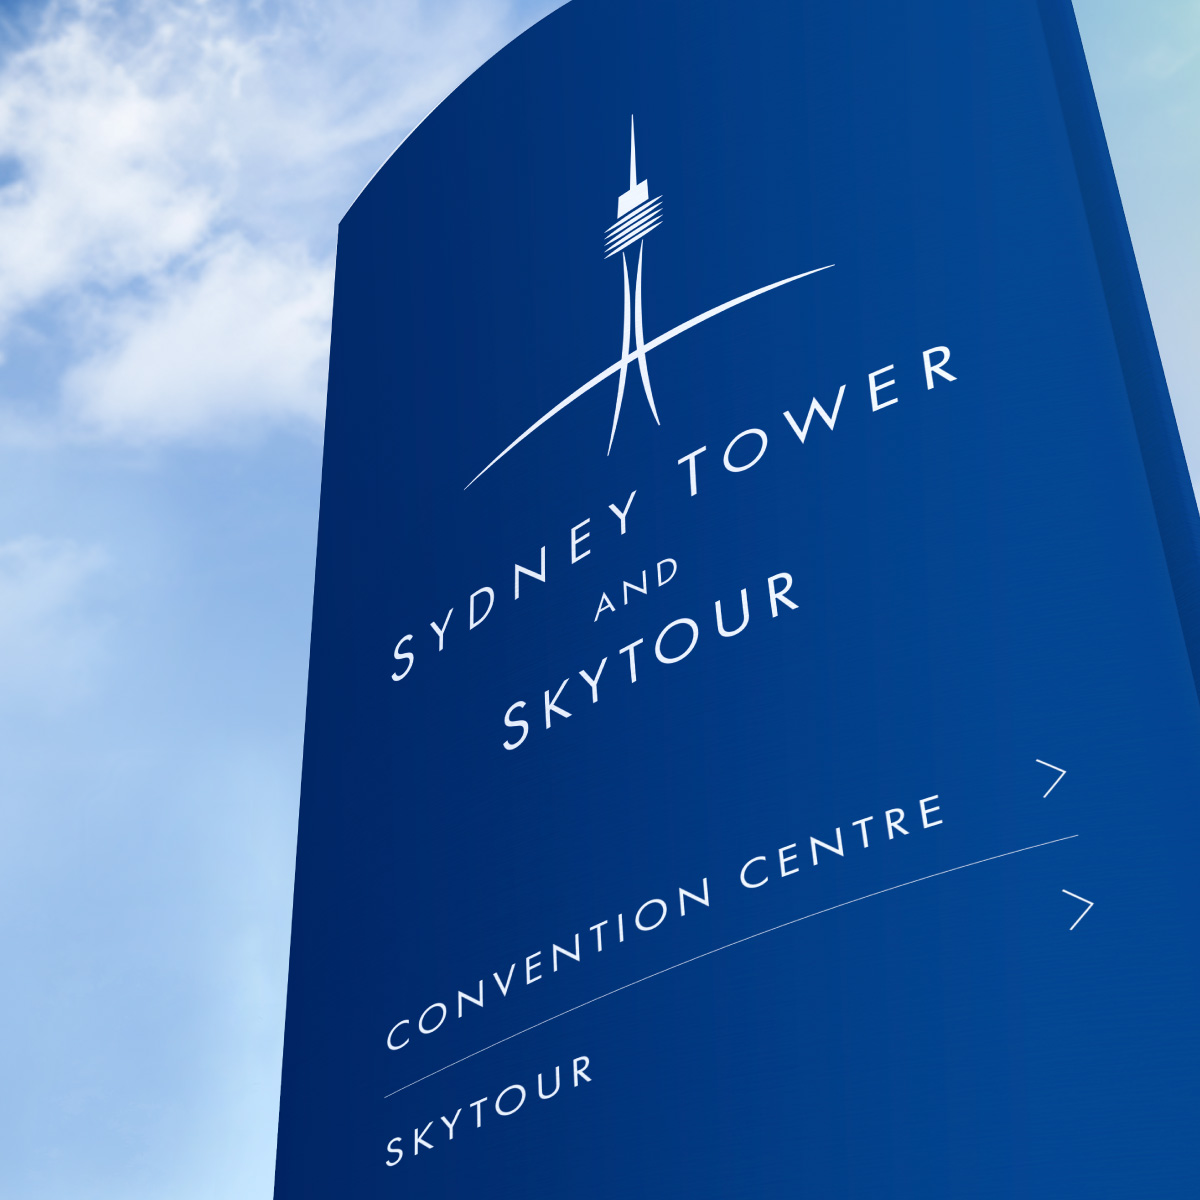 Sydney Tower Branding and Identity, Signage Design